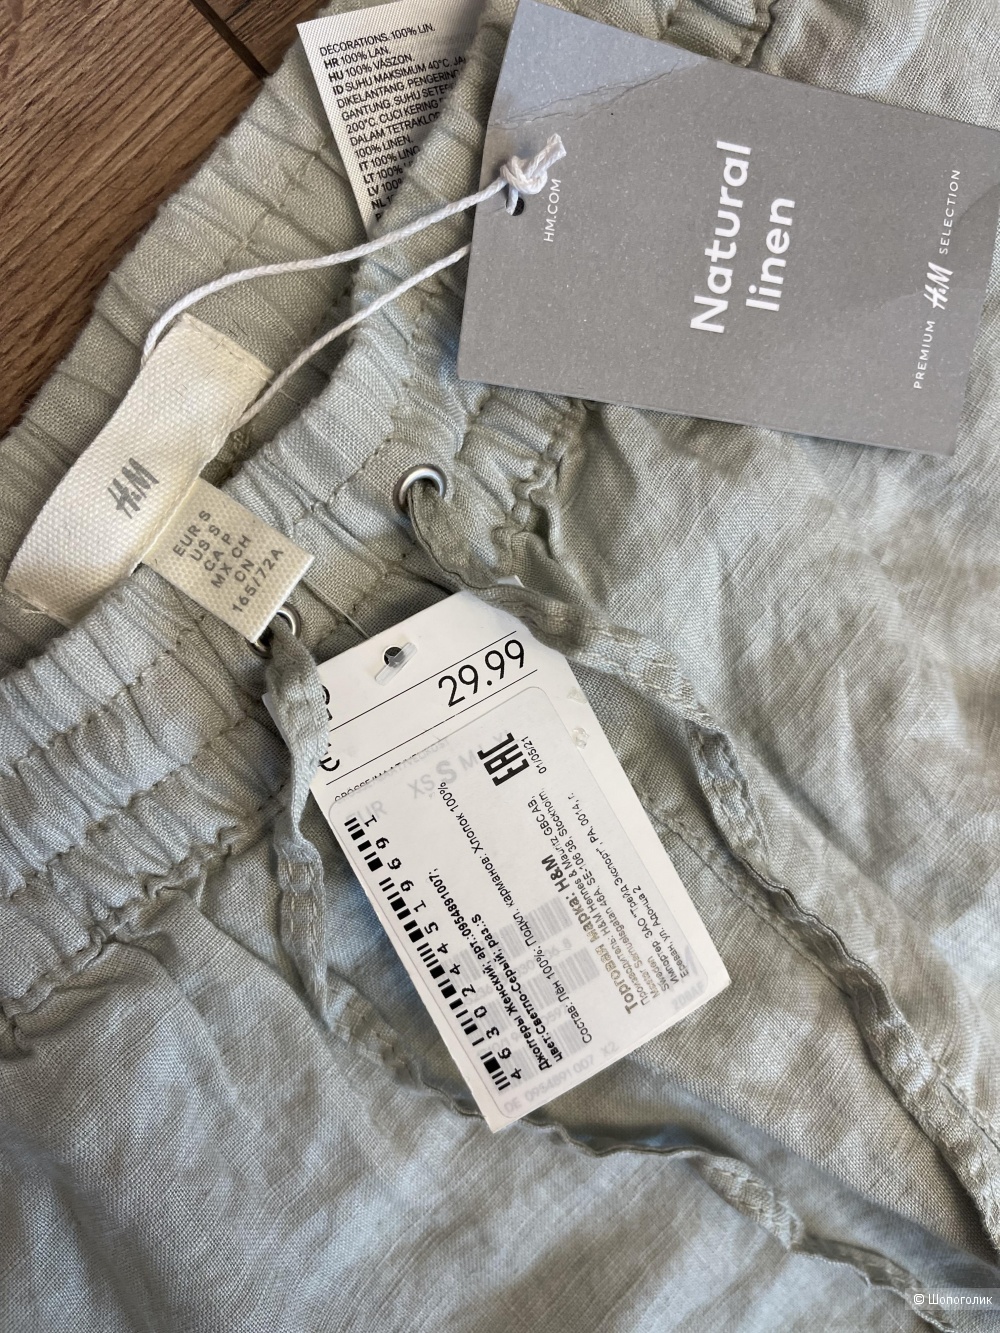 Льняные брюки H&M размер S